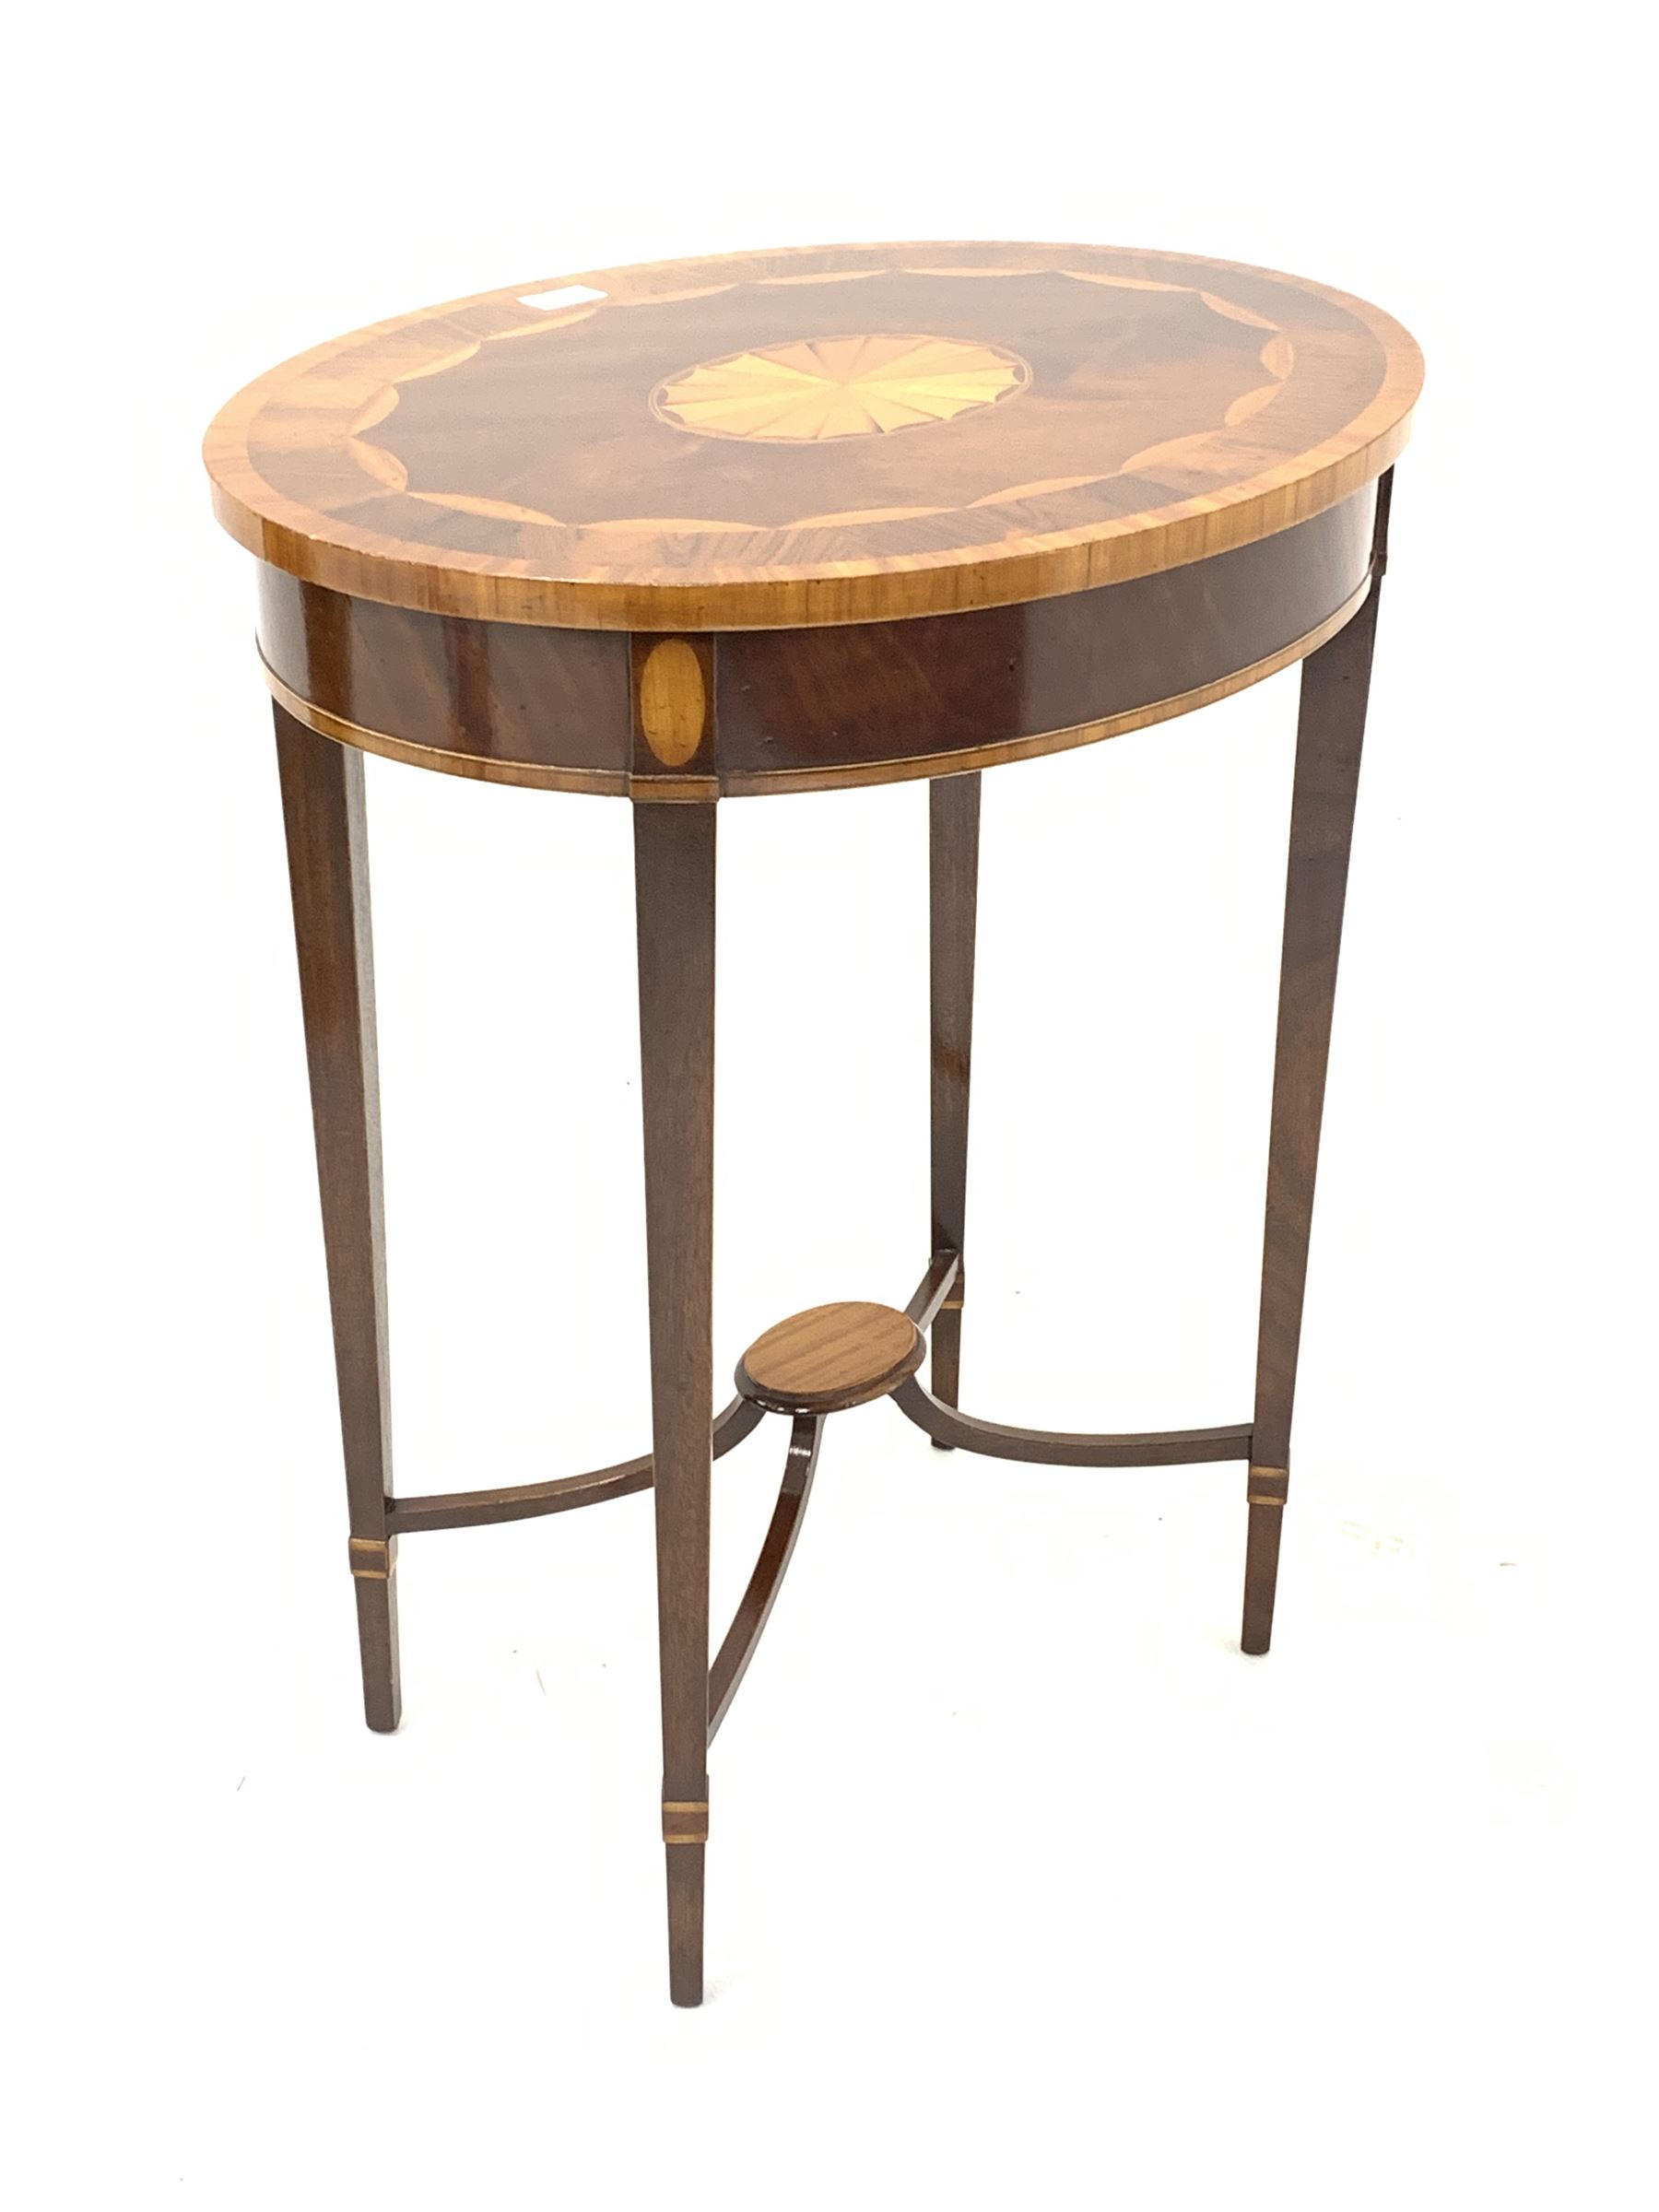 Sheraton style mahogany oval occasional table